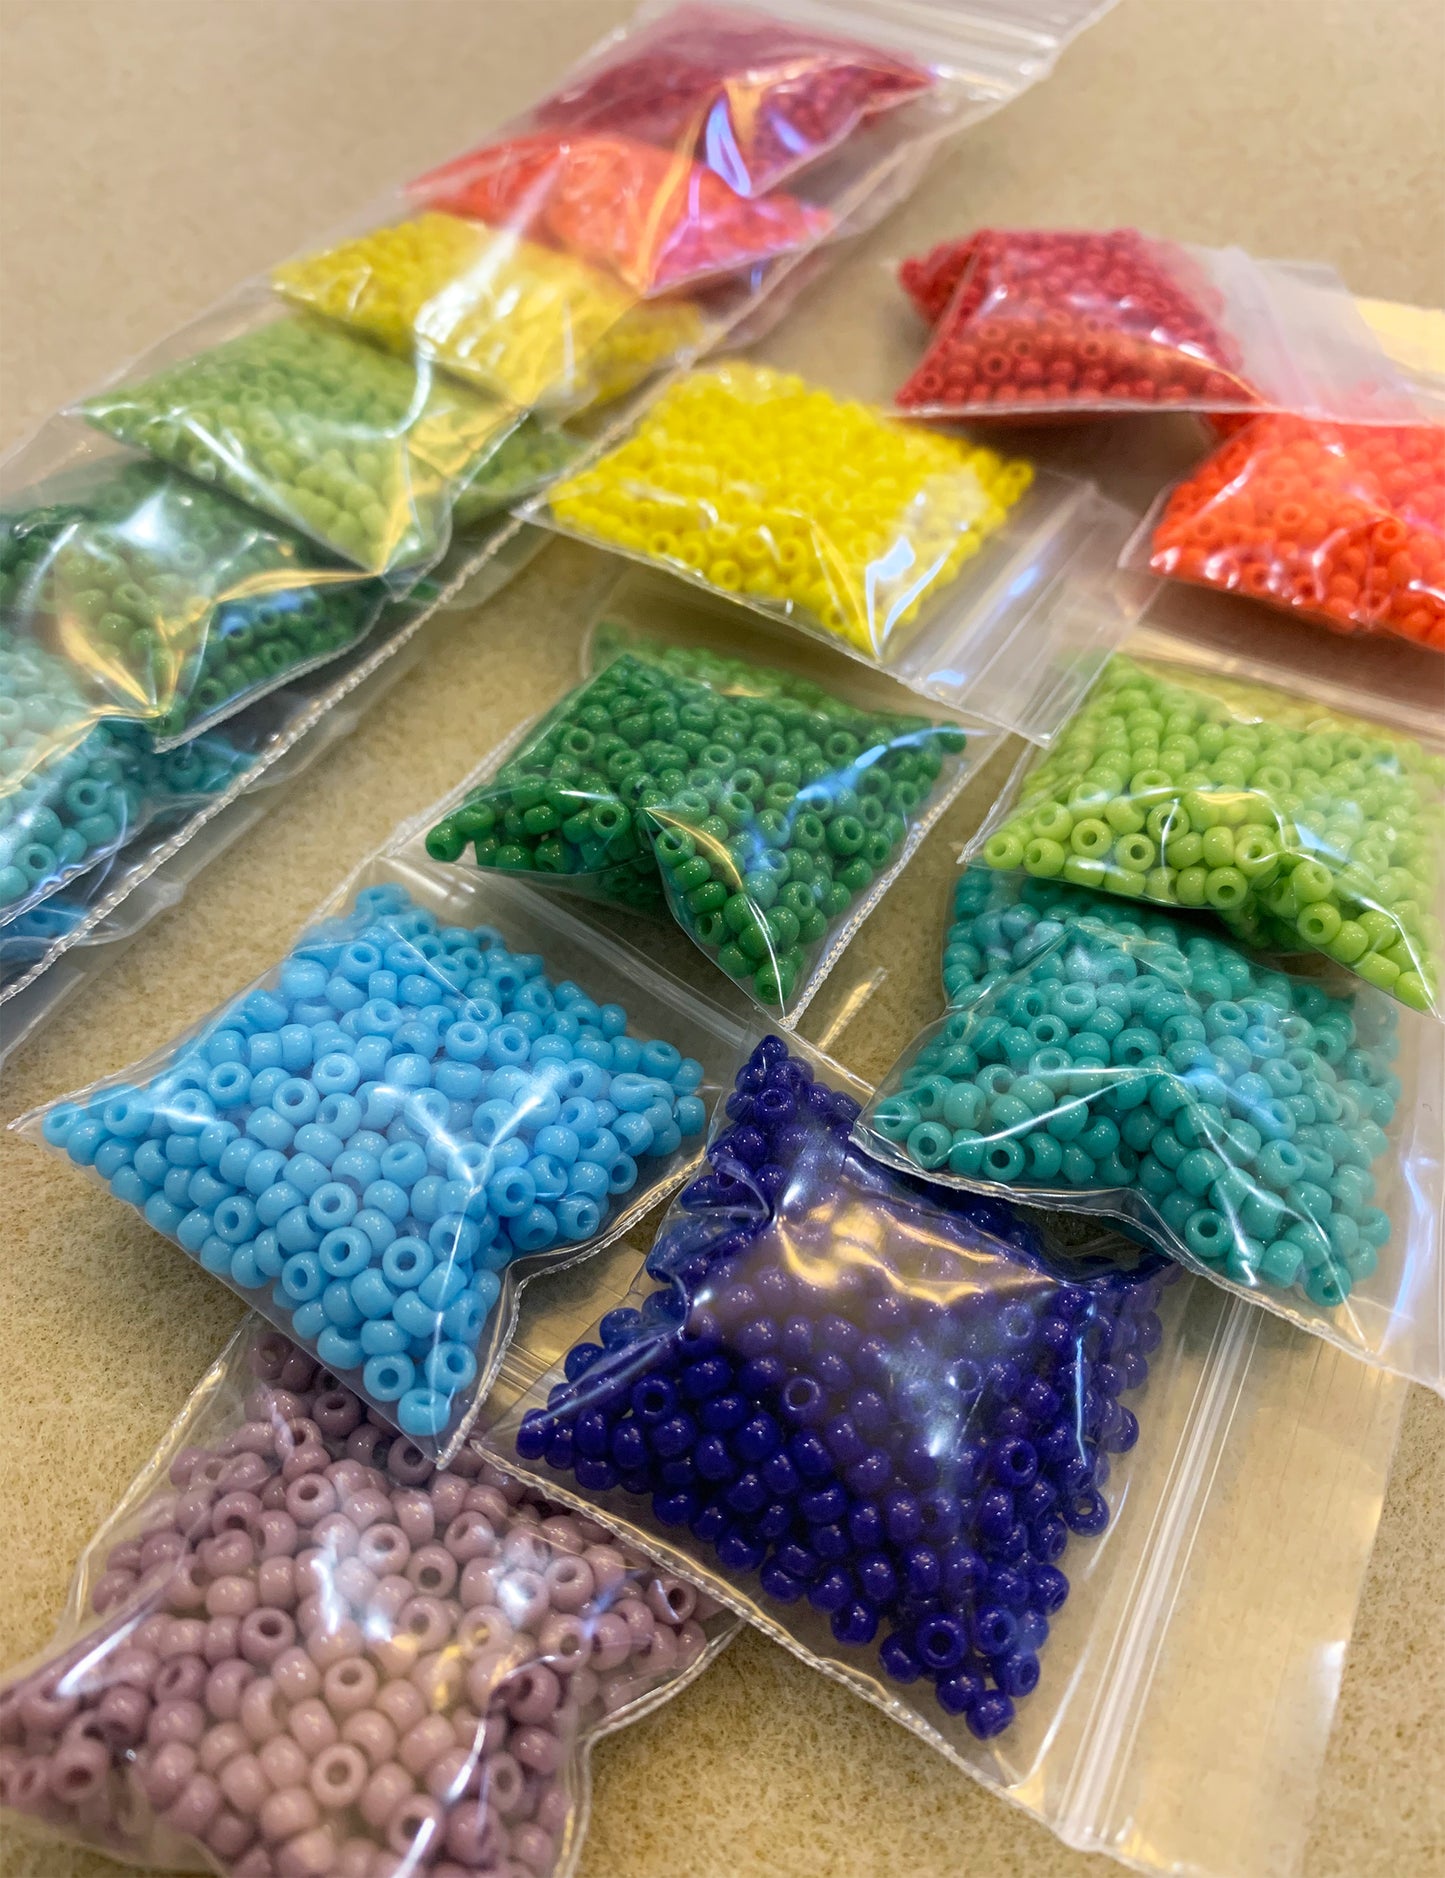 Miyuki Opaque Rainbow Seed Bead Set size 8/0